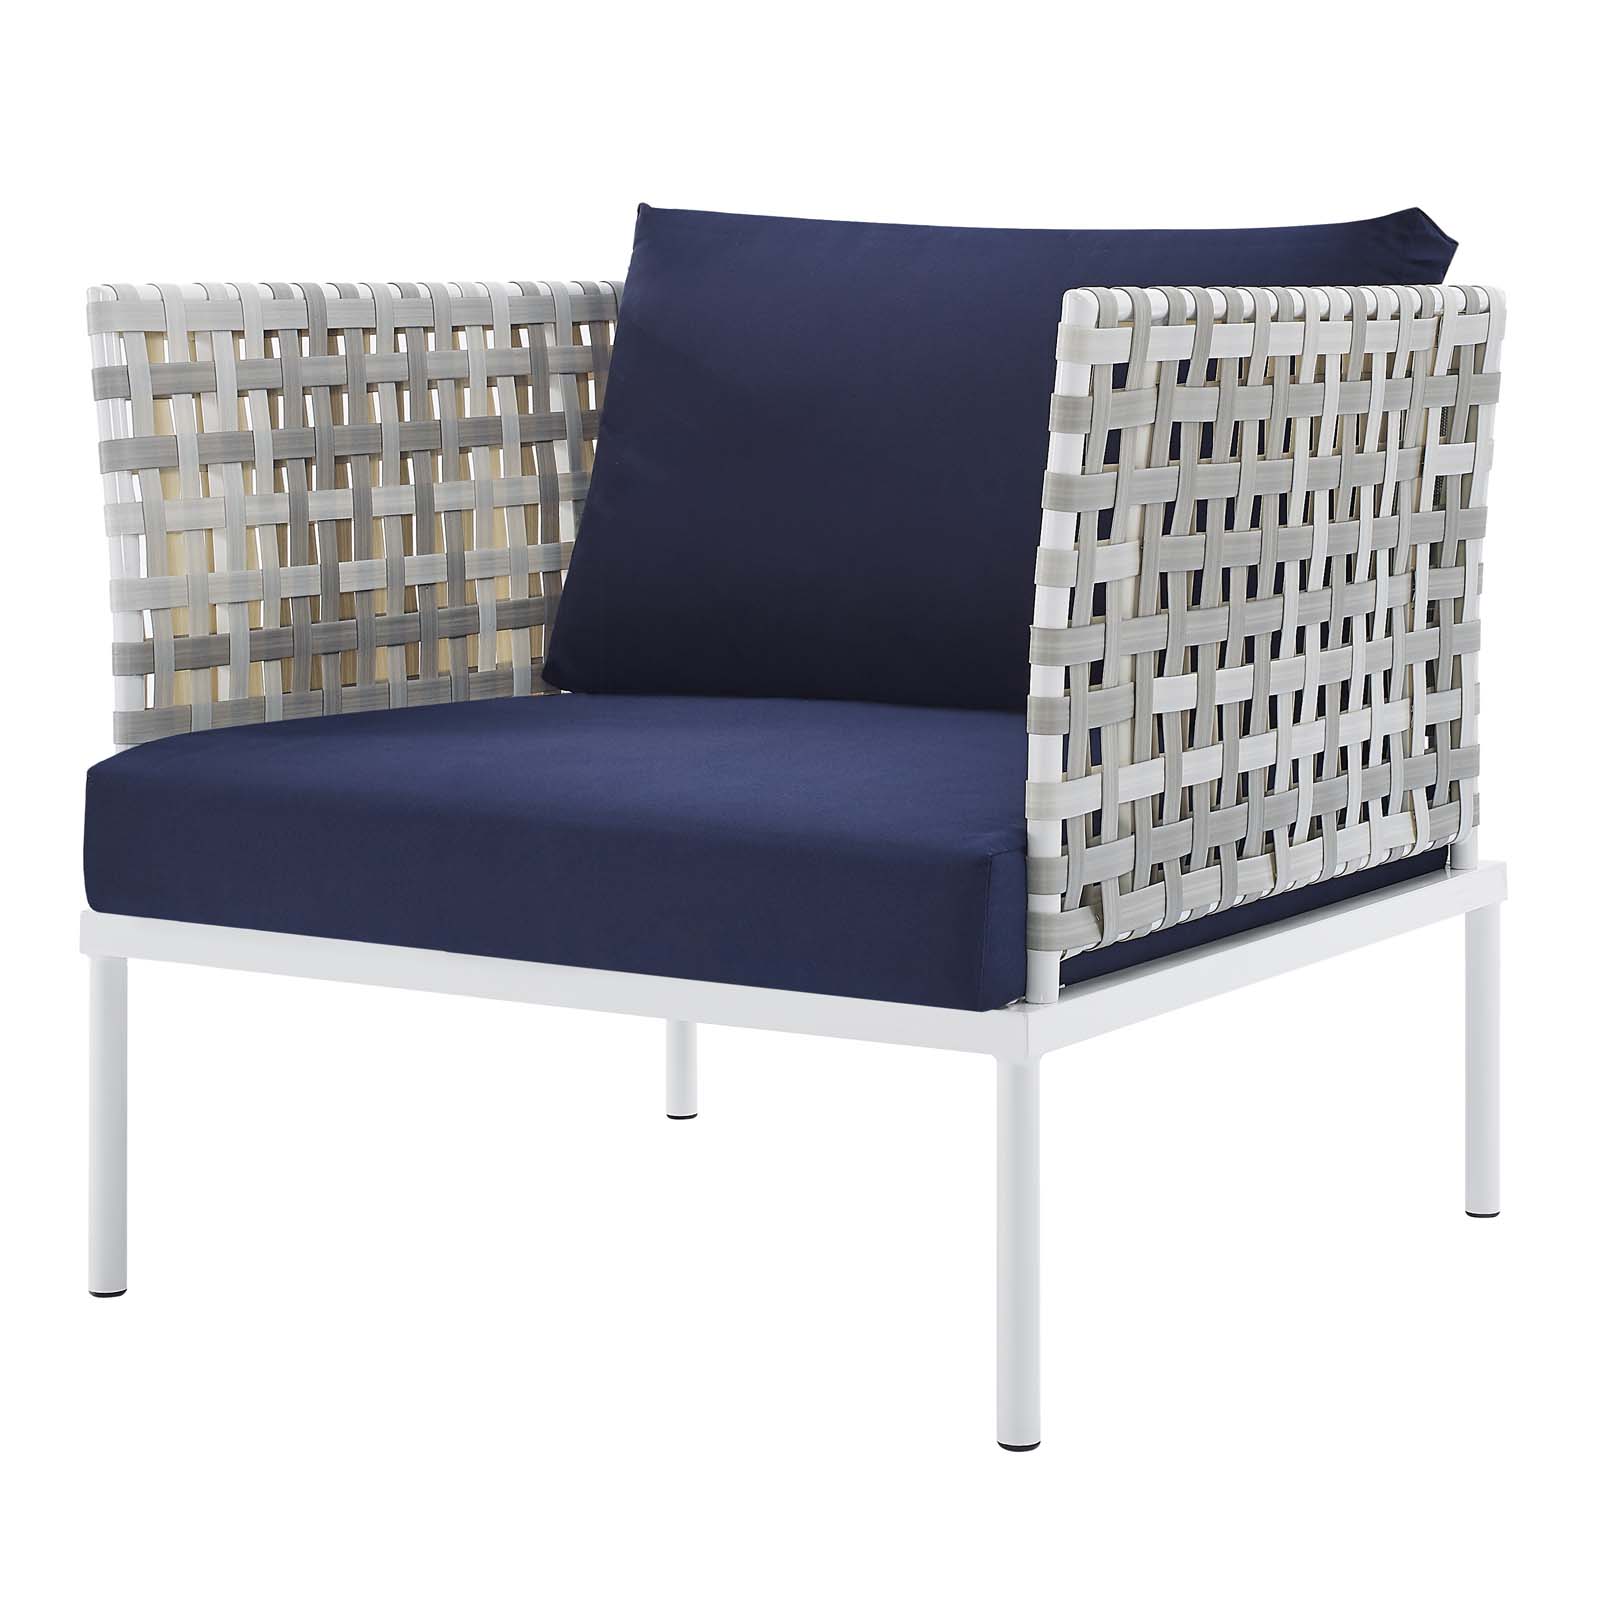 Lounge Chair Table Set, Sunbrella, Aluminum, Metal, Steel, Blue Navy, Modern Contemporary Urban Design, Outdoor Patio Balcony Cafe Bistro Garden Furniture Hotel Hospitality - image 3 of 10